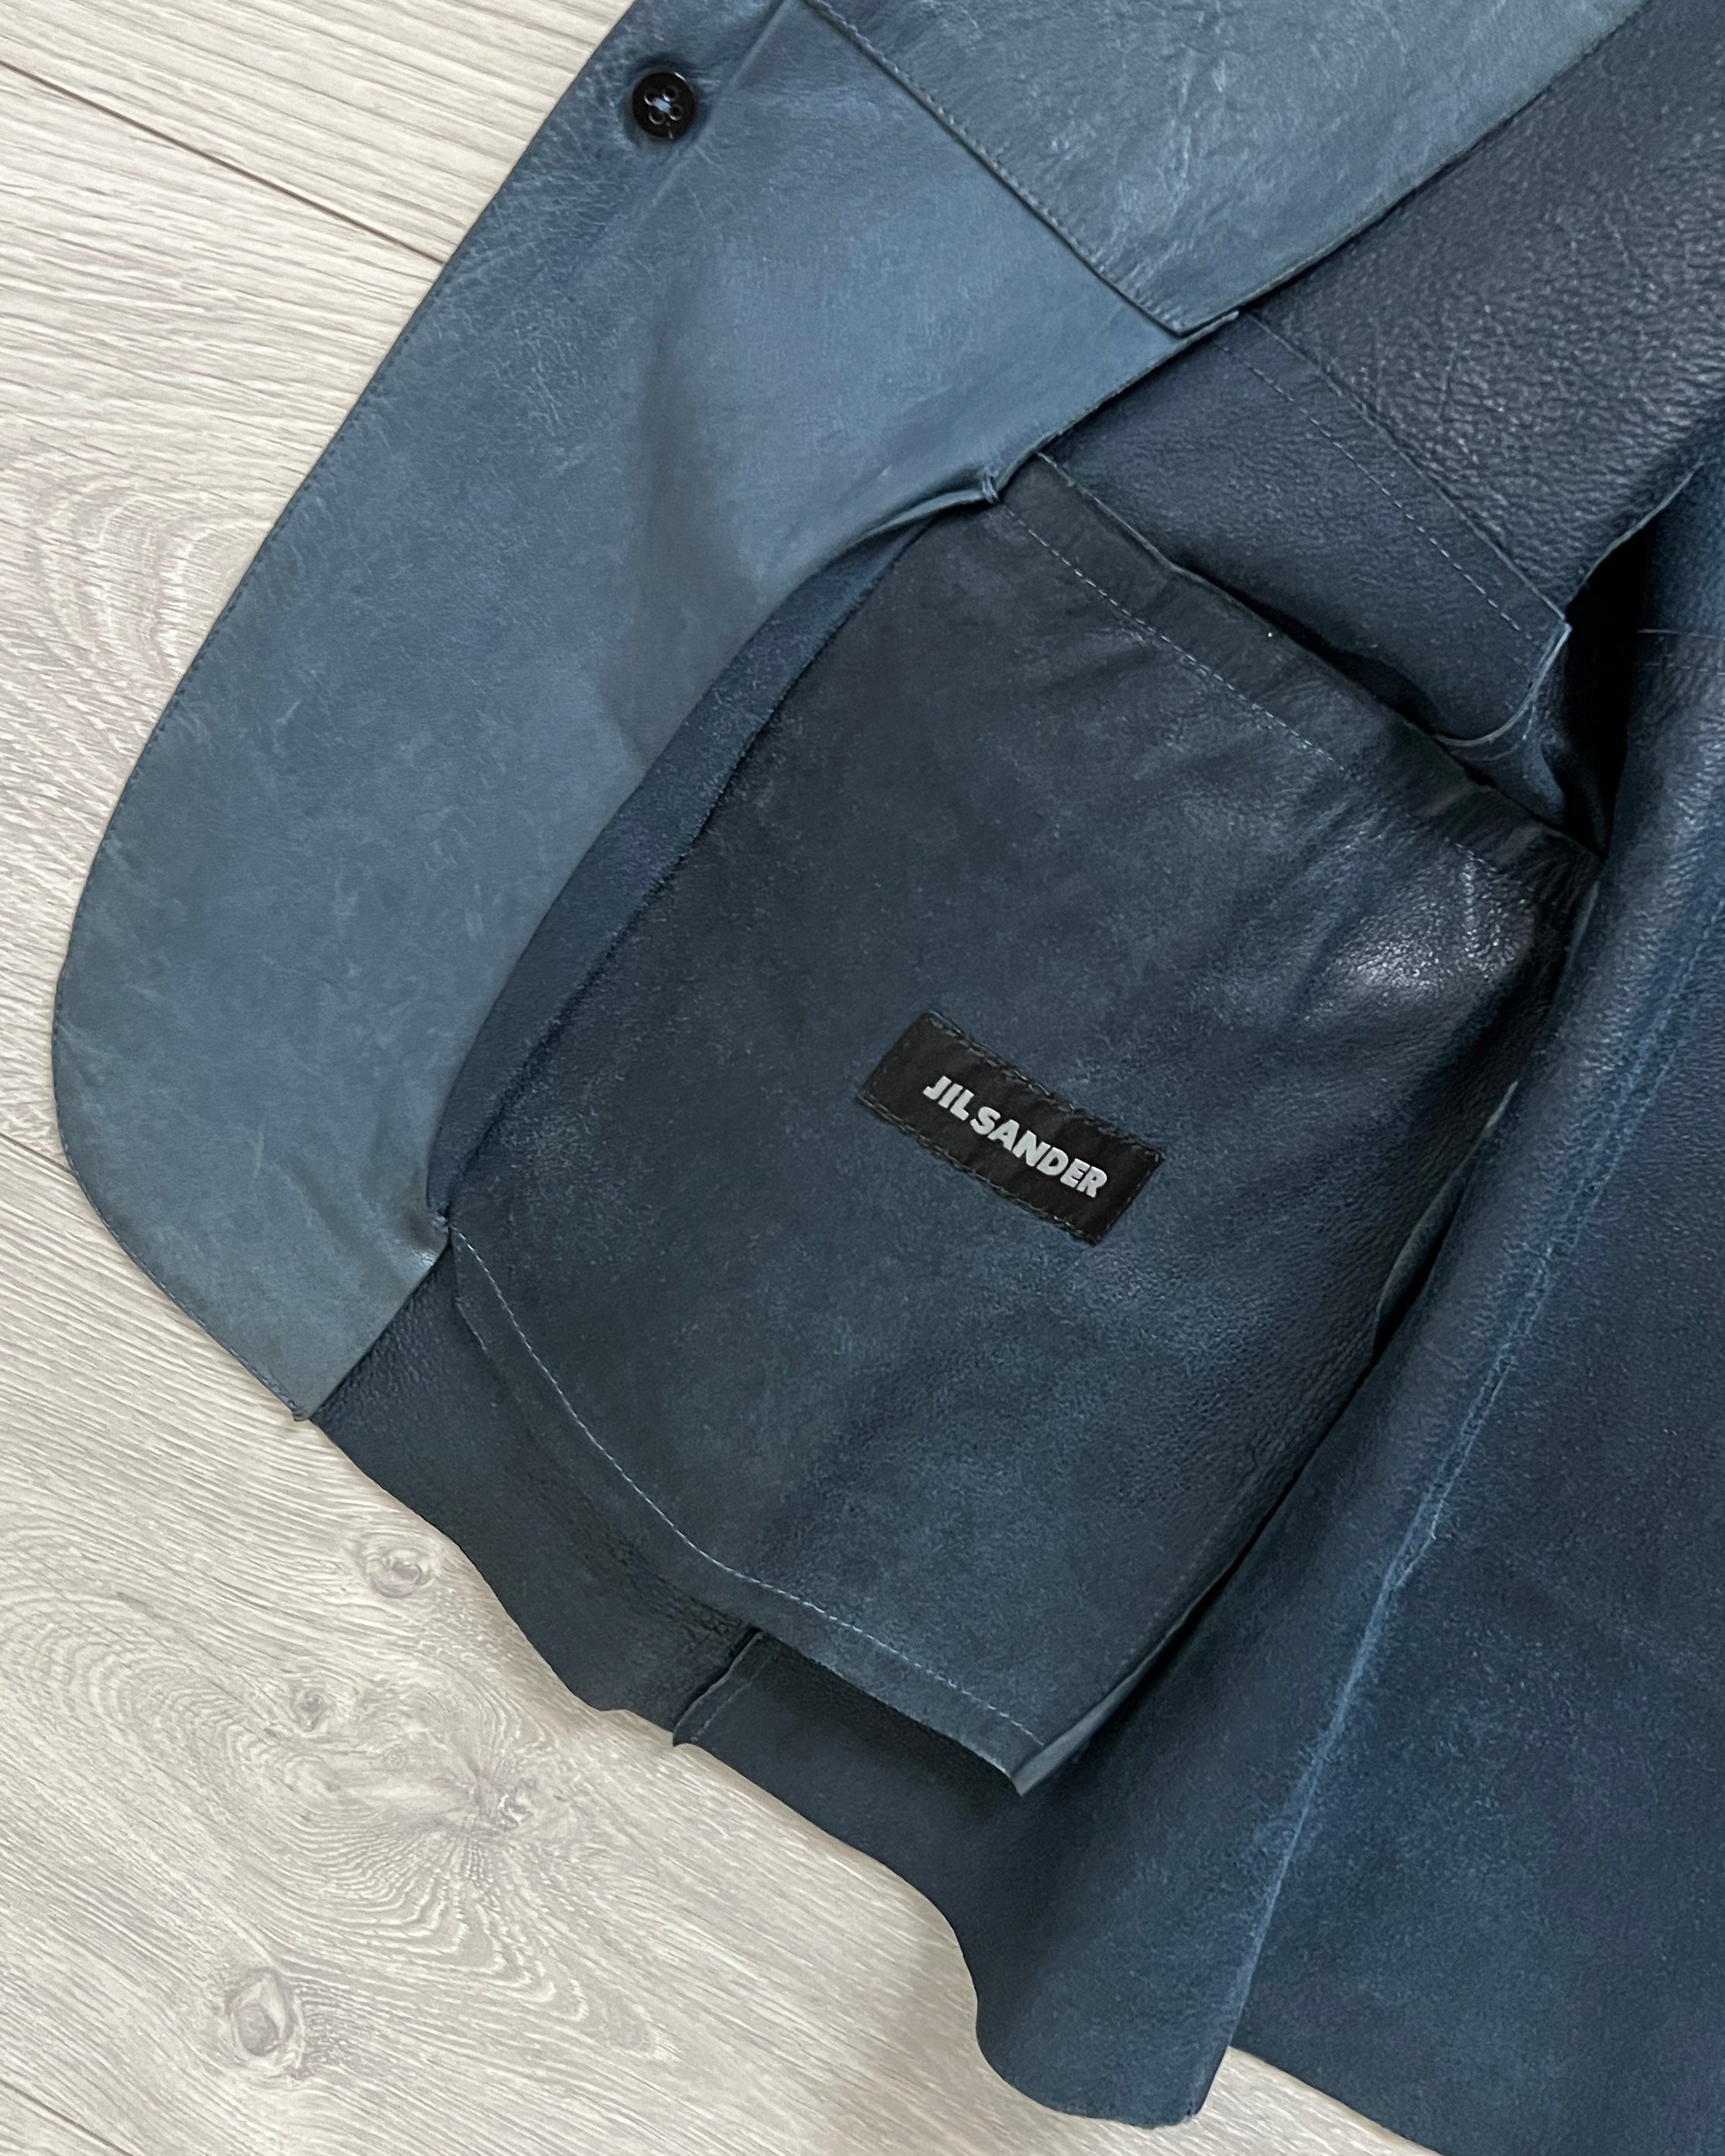 Jil Sander by Raf Simons 00s Petrol Blue Leather Jacket - Size S 